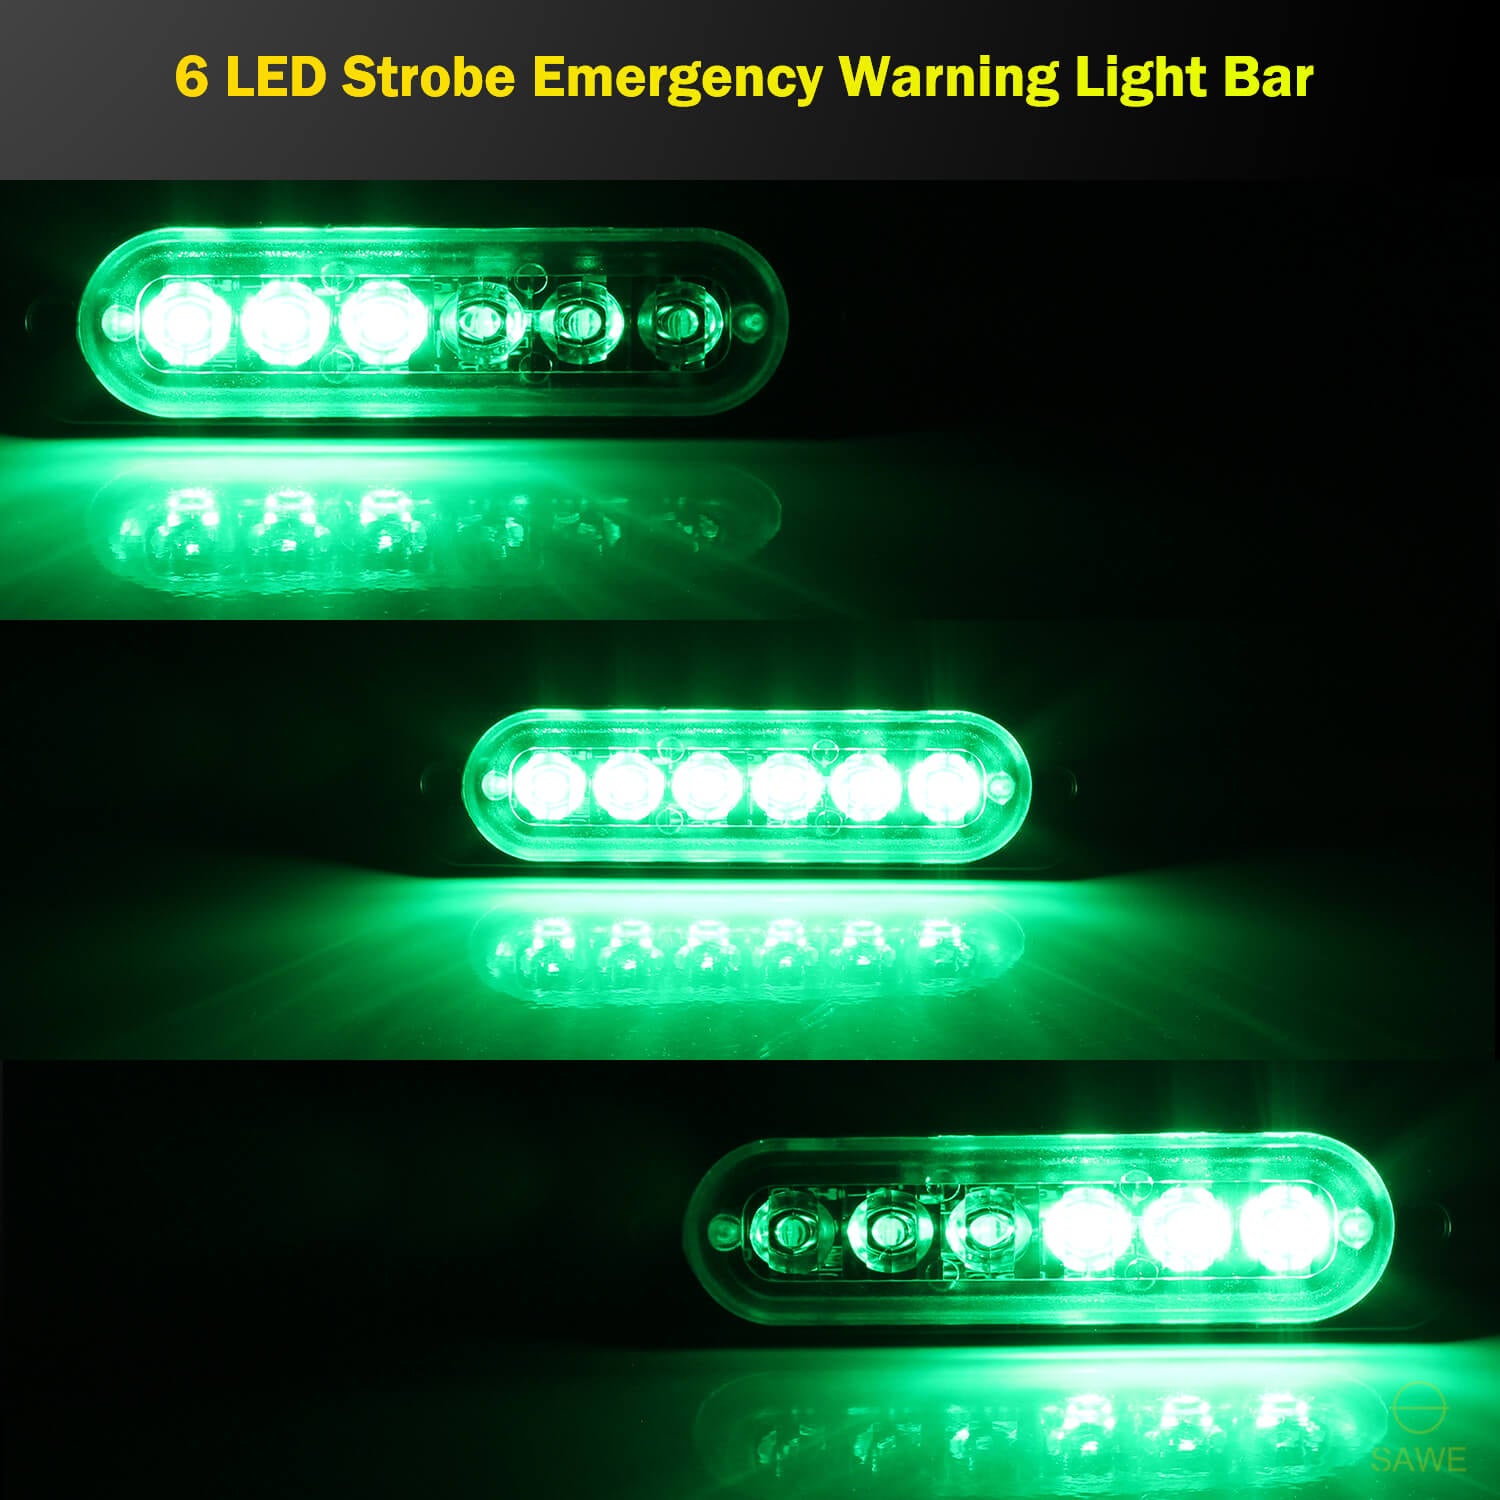 Emergency LED Strobe Lights Bar for Offroad Car Truck Warning Hazard Flash Grille and Surface Mount Light - Green 6-LED